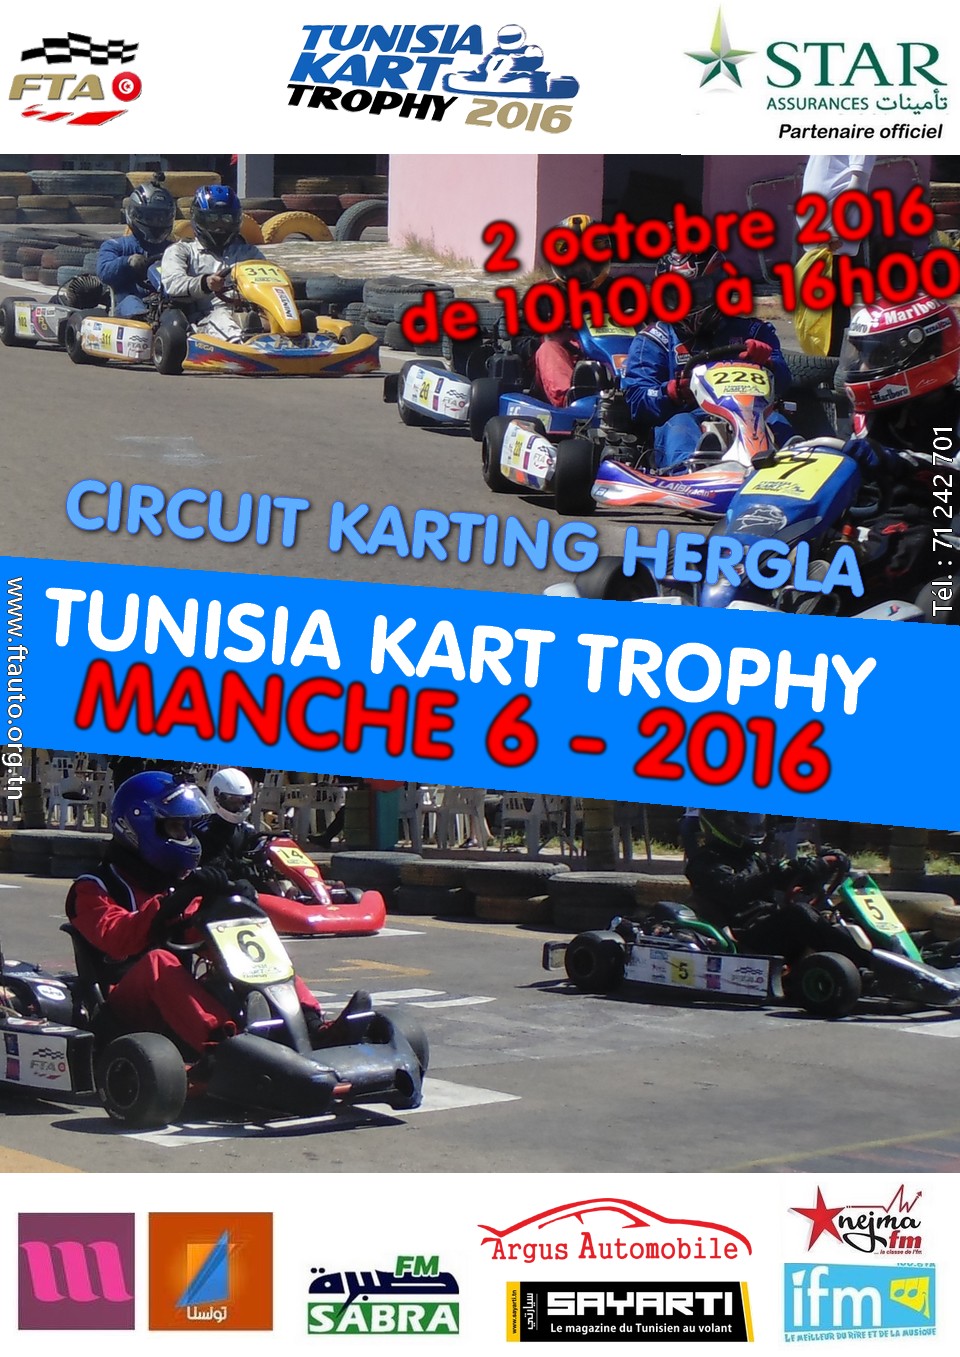 Manche 6 – Tunisia Kart Trophy 2016